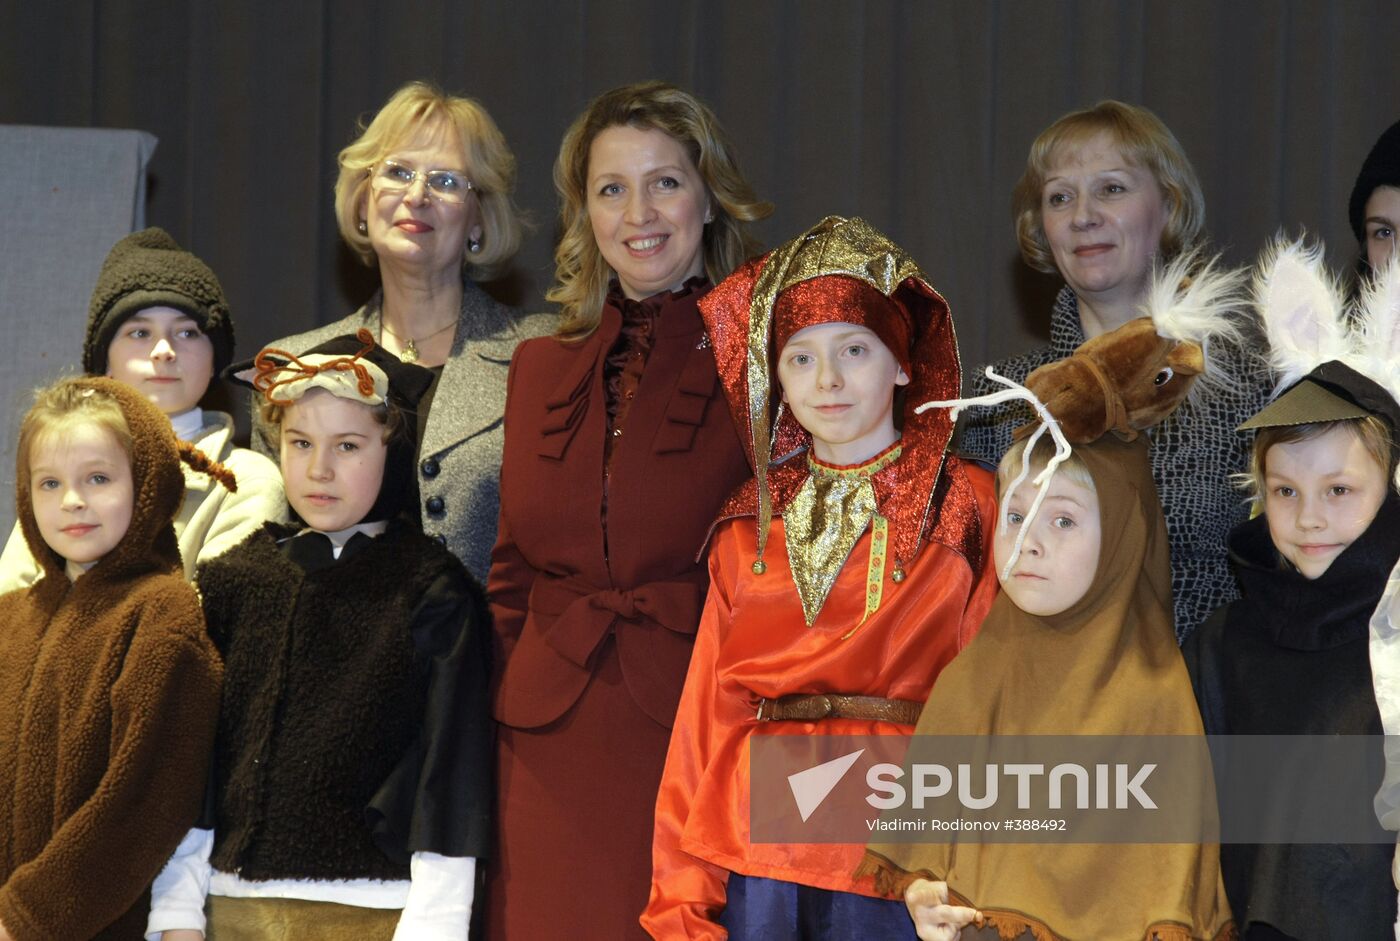 Svetlana Medvedeva visits Finland